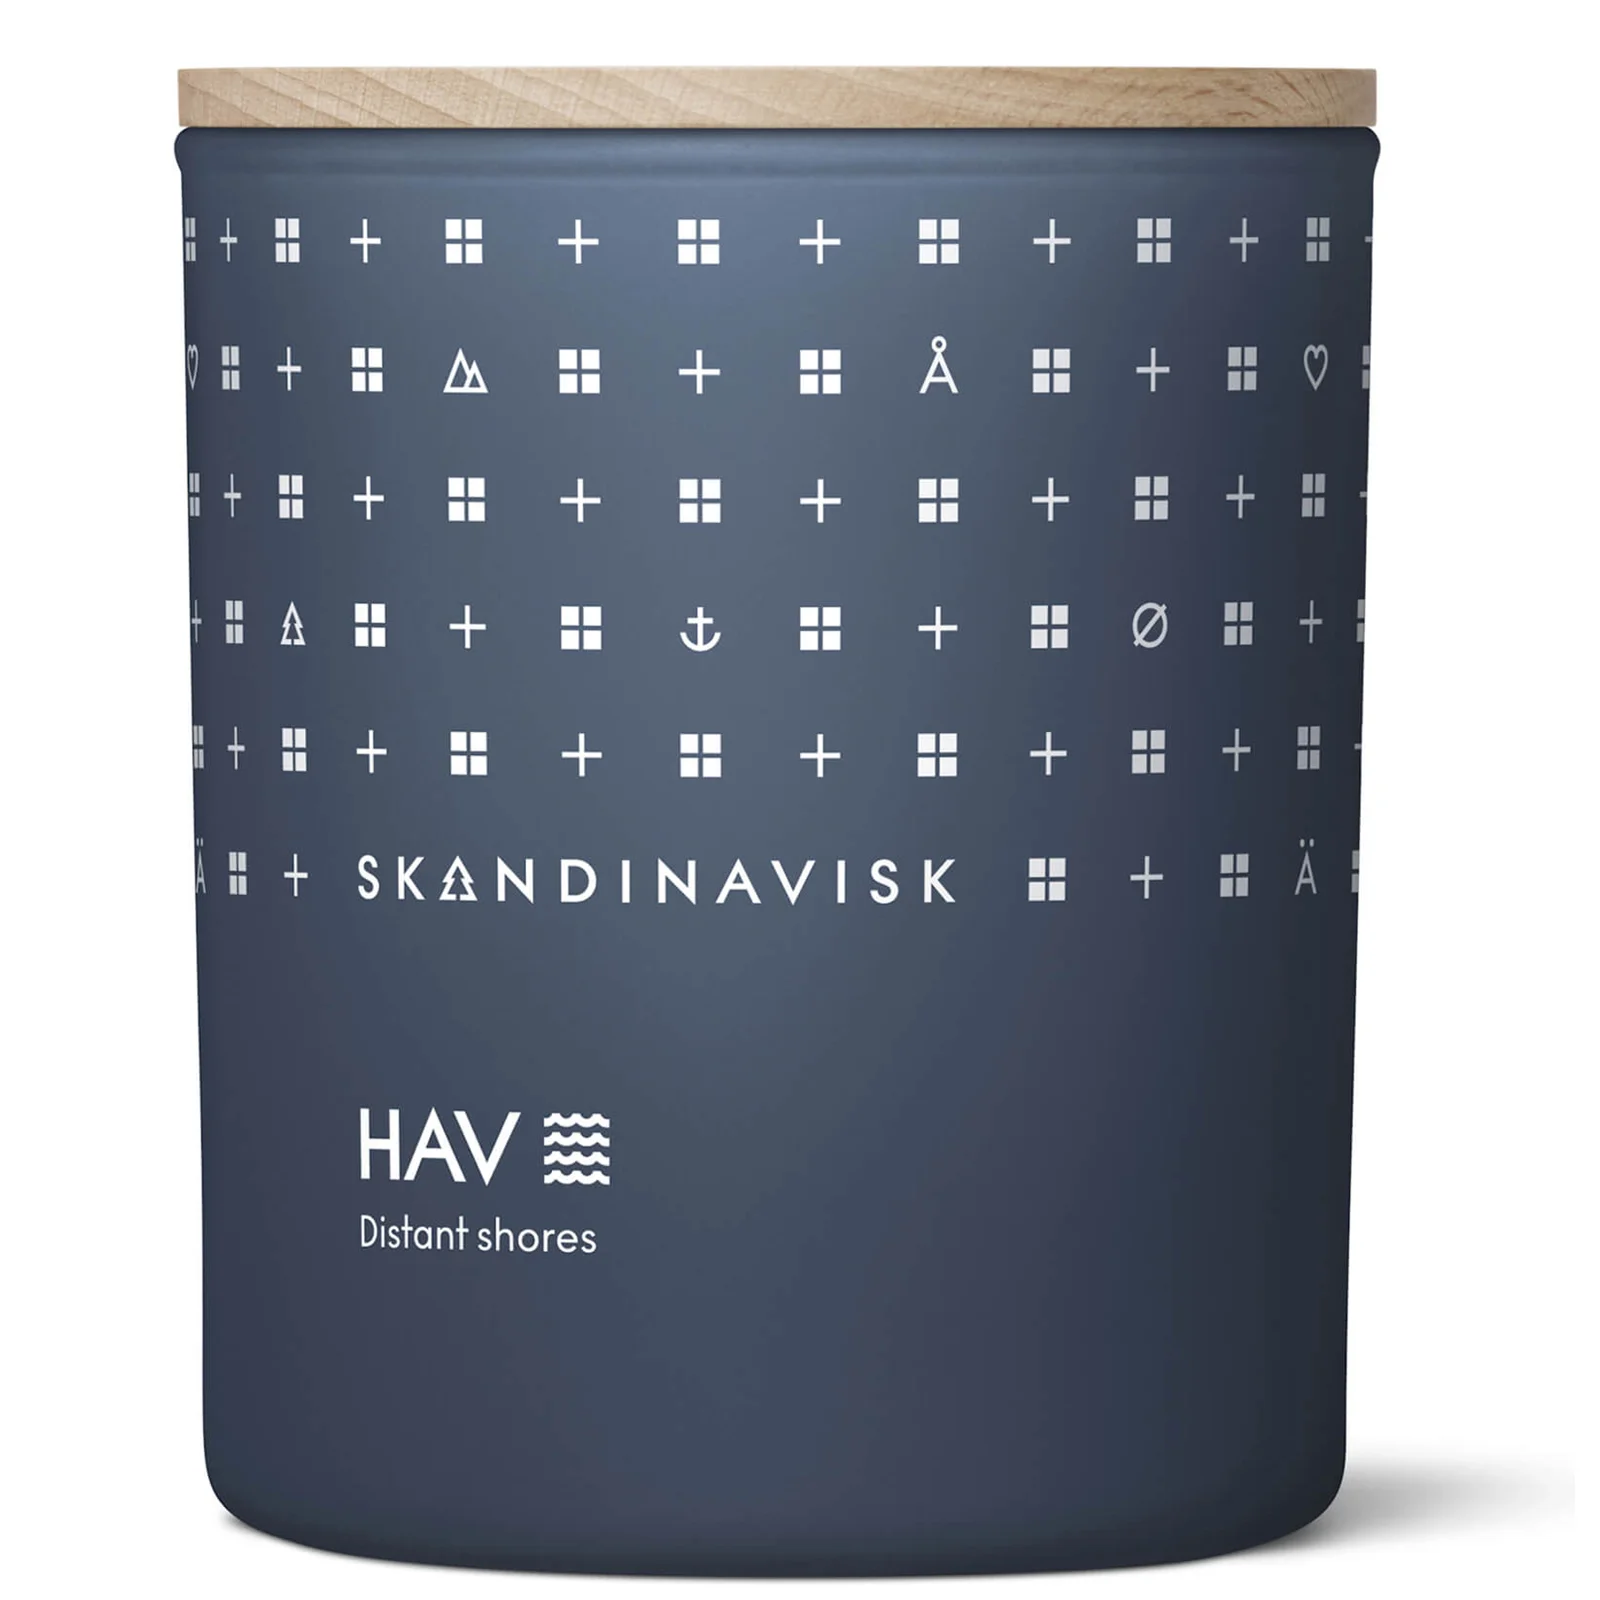 SKANDINAVISK Scented Candle - Hav Image 1